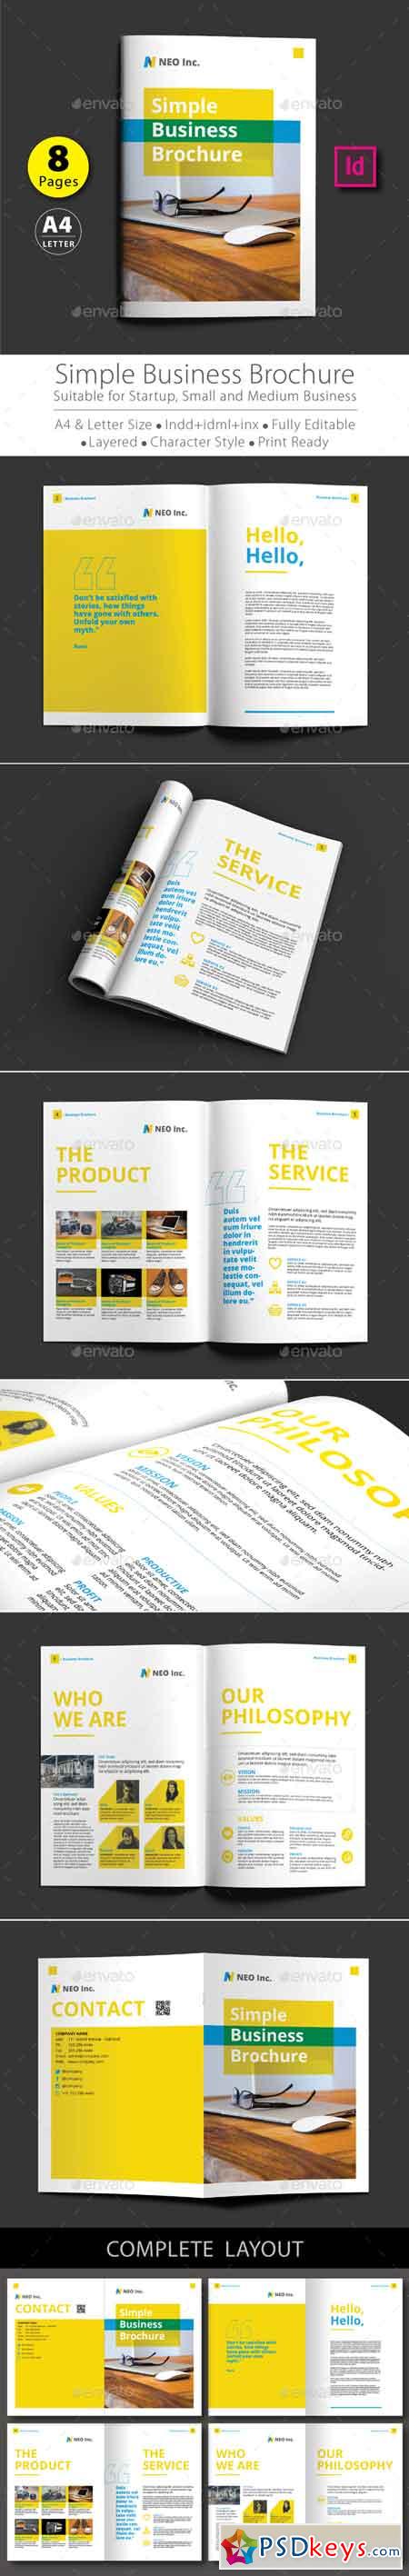 Simple Business Brochure Template V.1 16440430